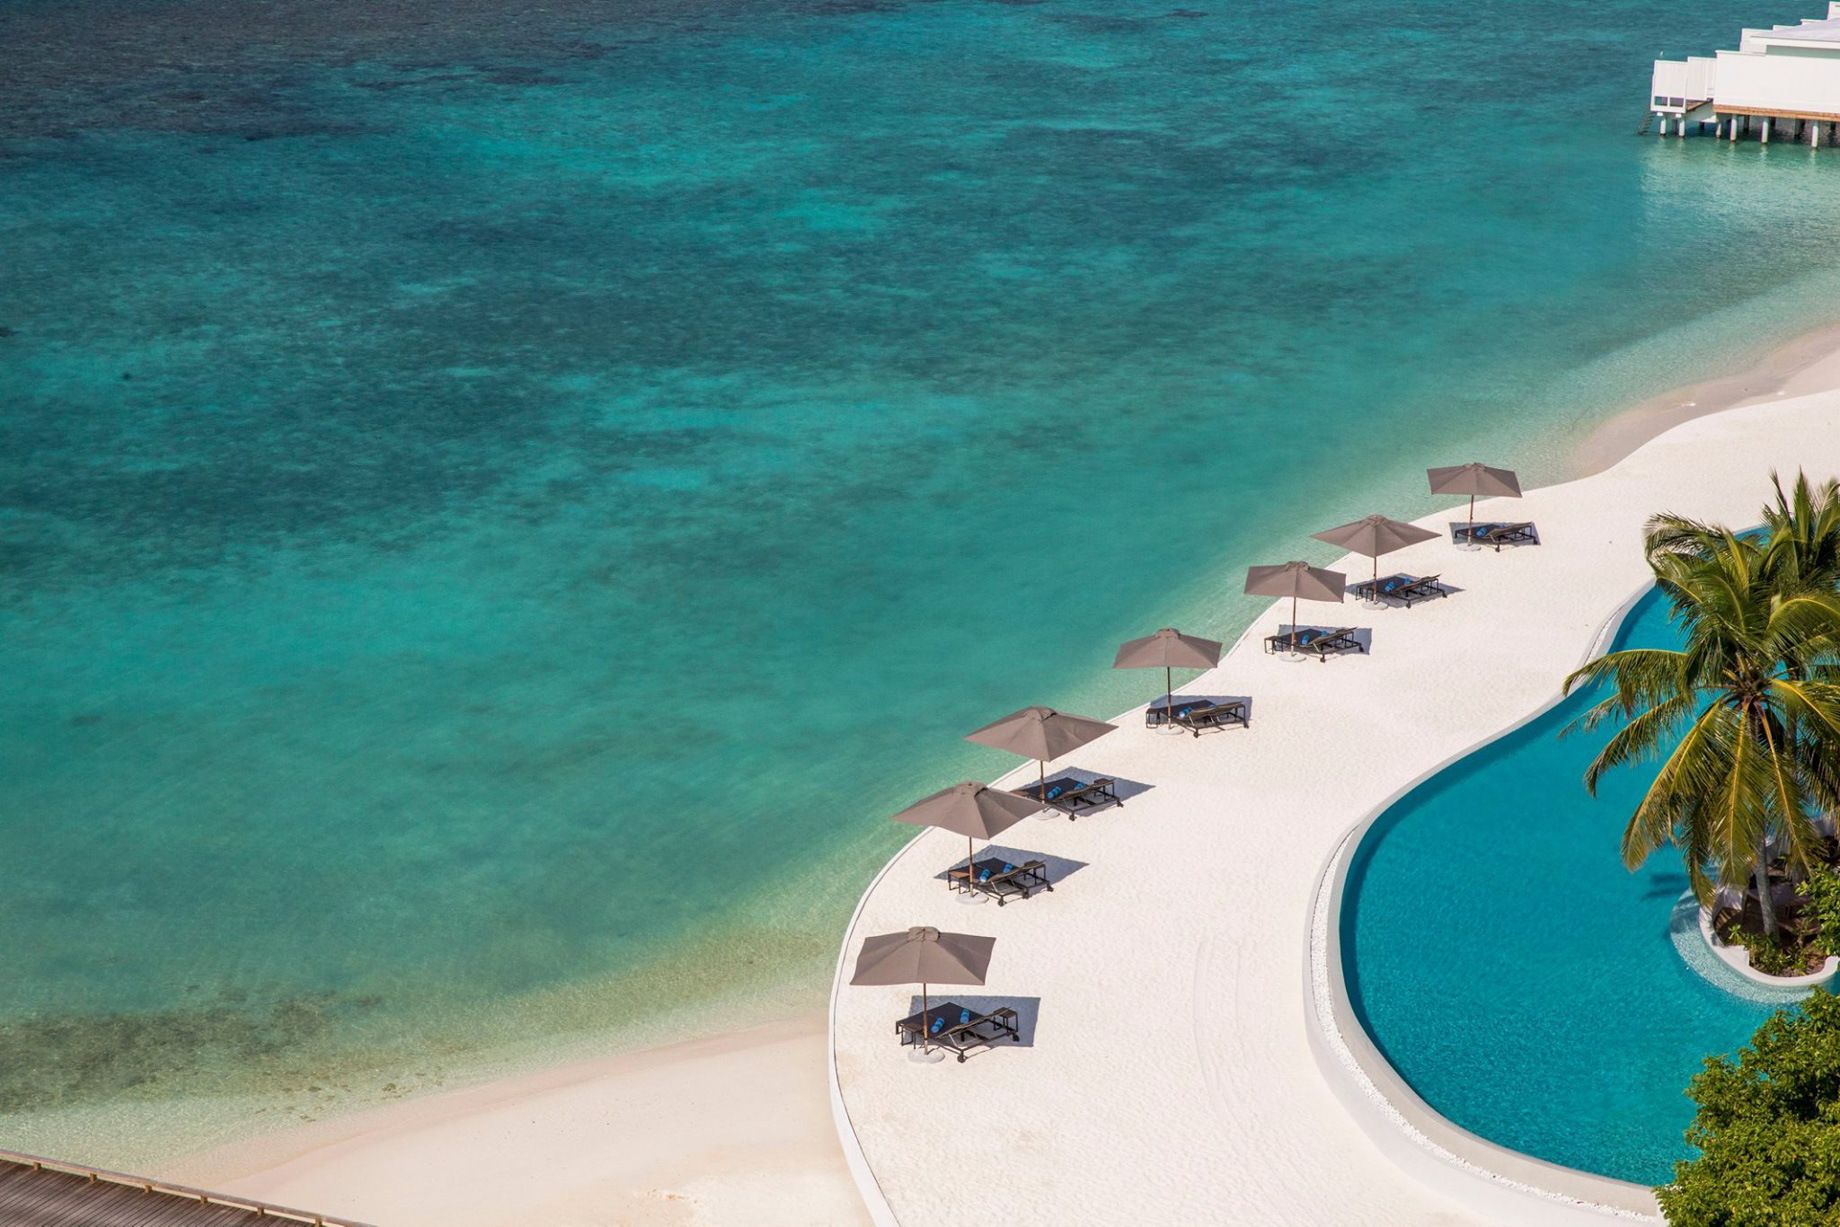 Amilla Fushi Resort and Residences - Baa Atoll, Maldives - Beachfront Pool Umbrellas Aerial